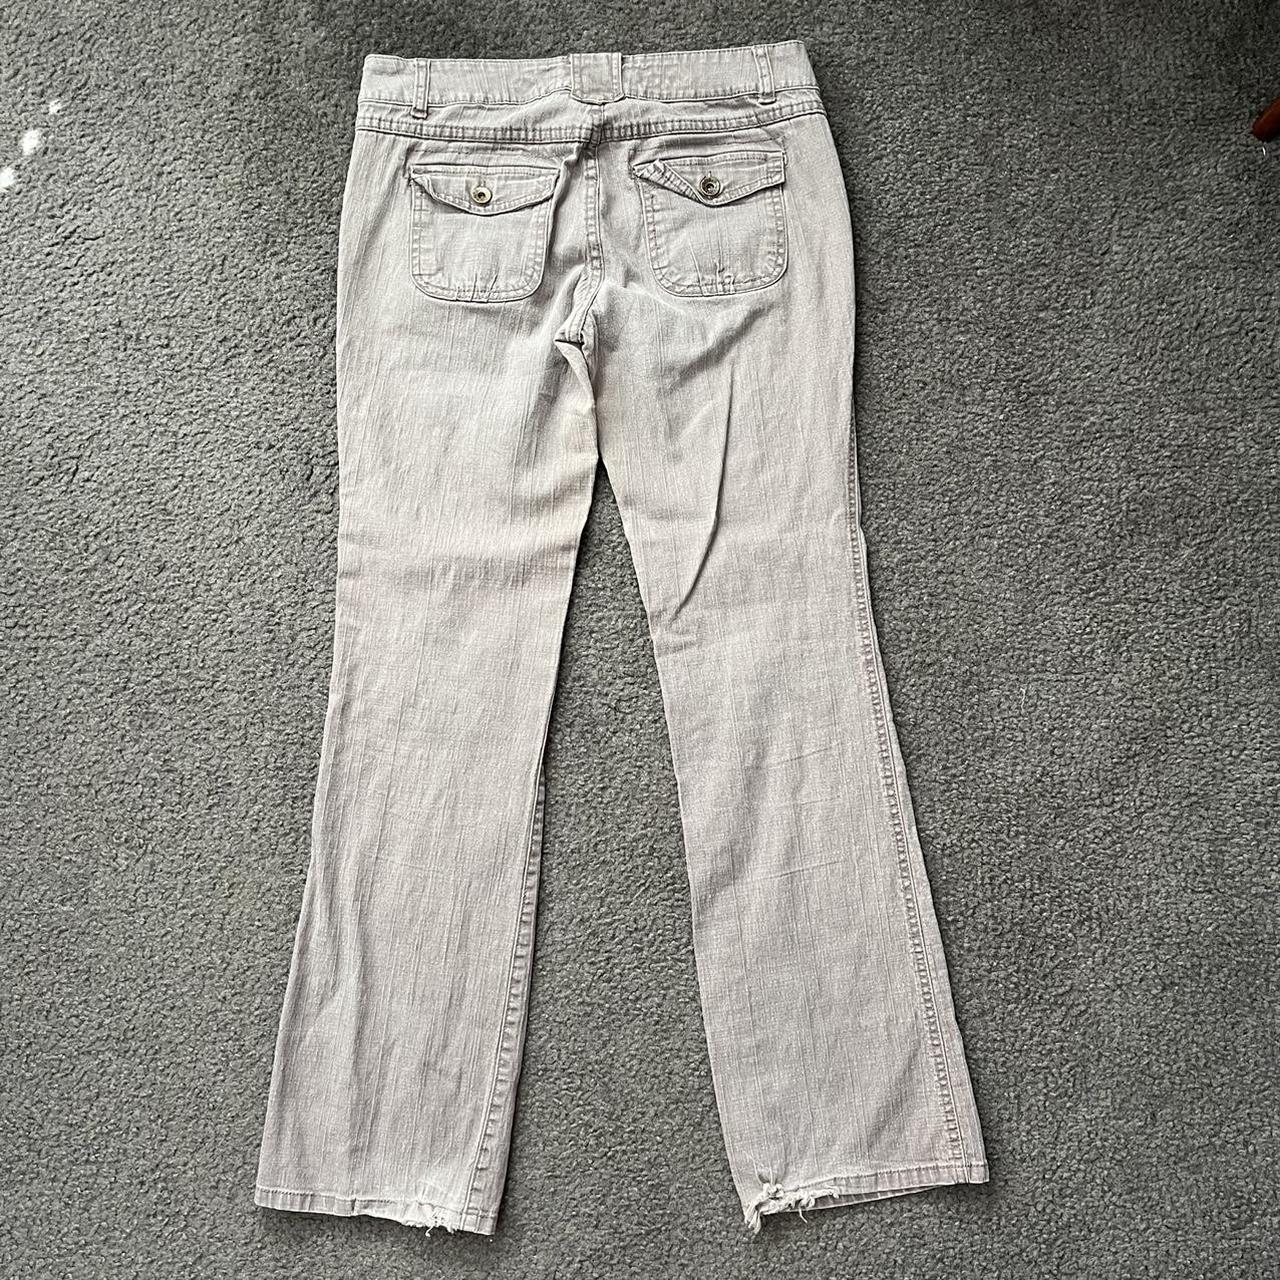 Product Image 4 - 🤎 Y2K Cargo Pants 🤎

Size